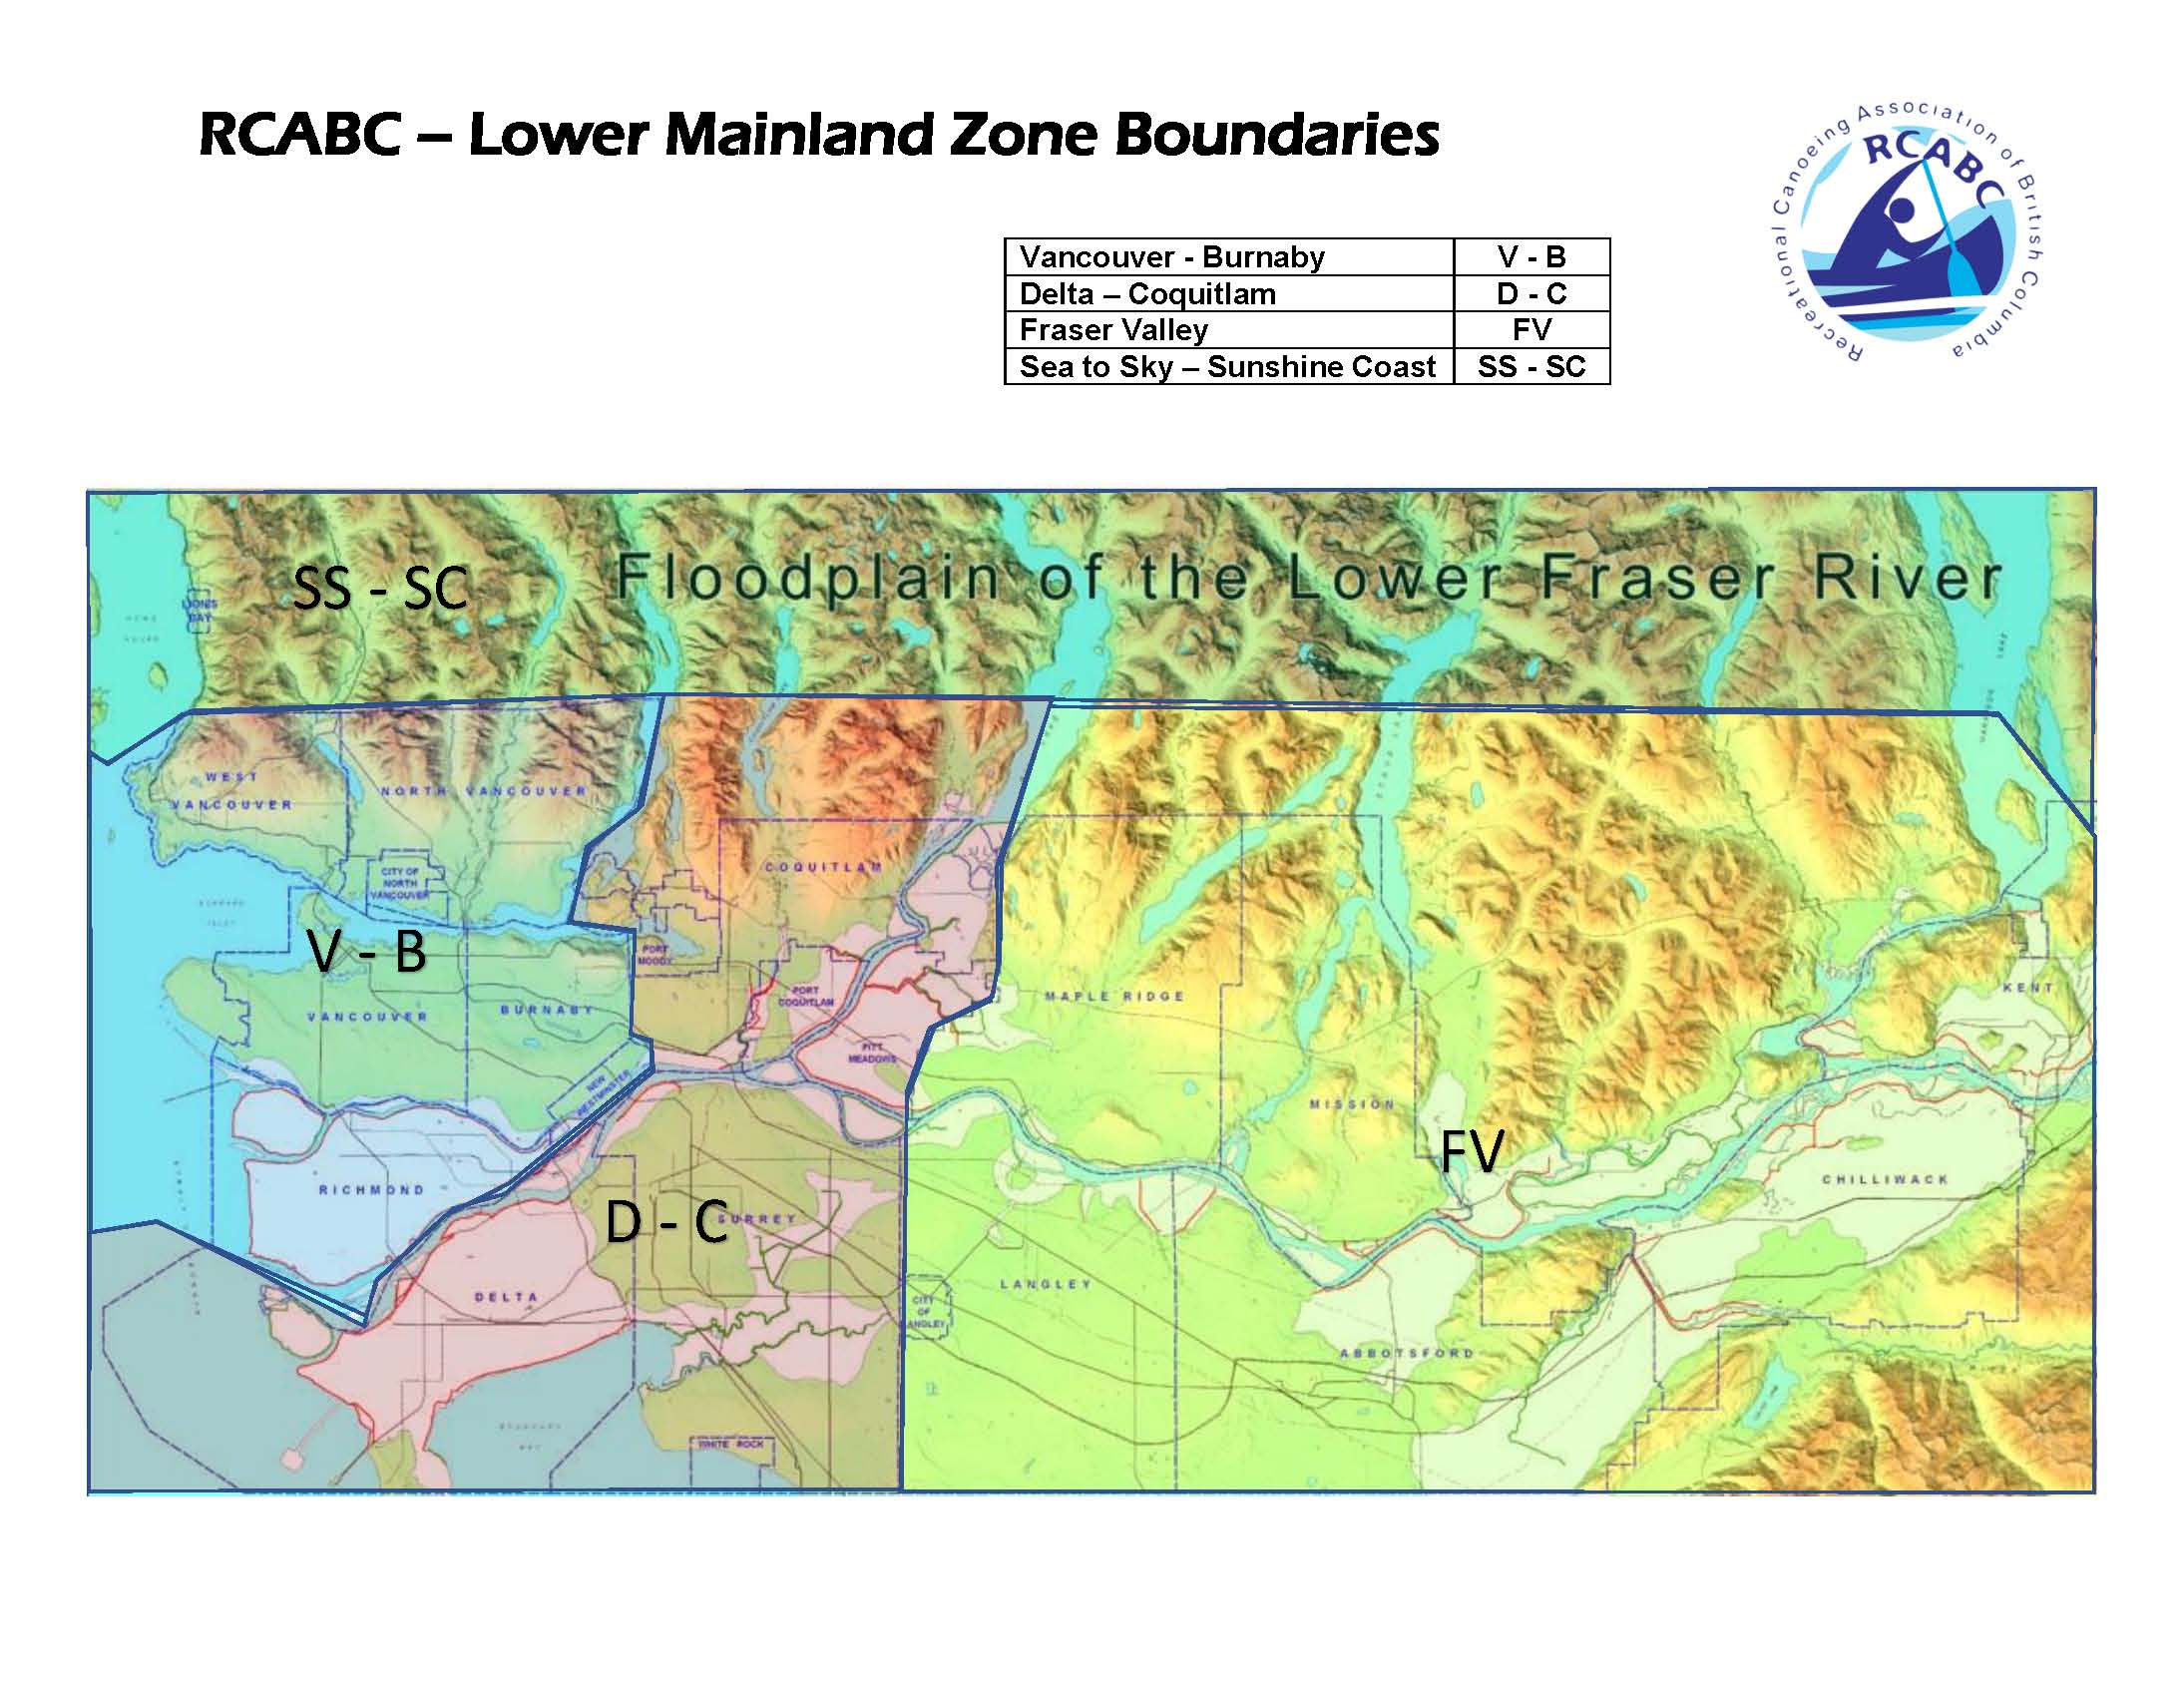 RCABC Lower Mainland Zones Map